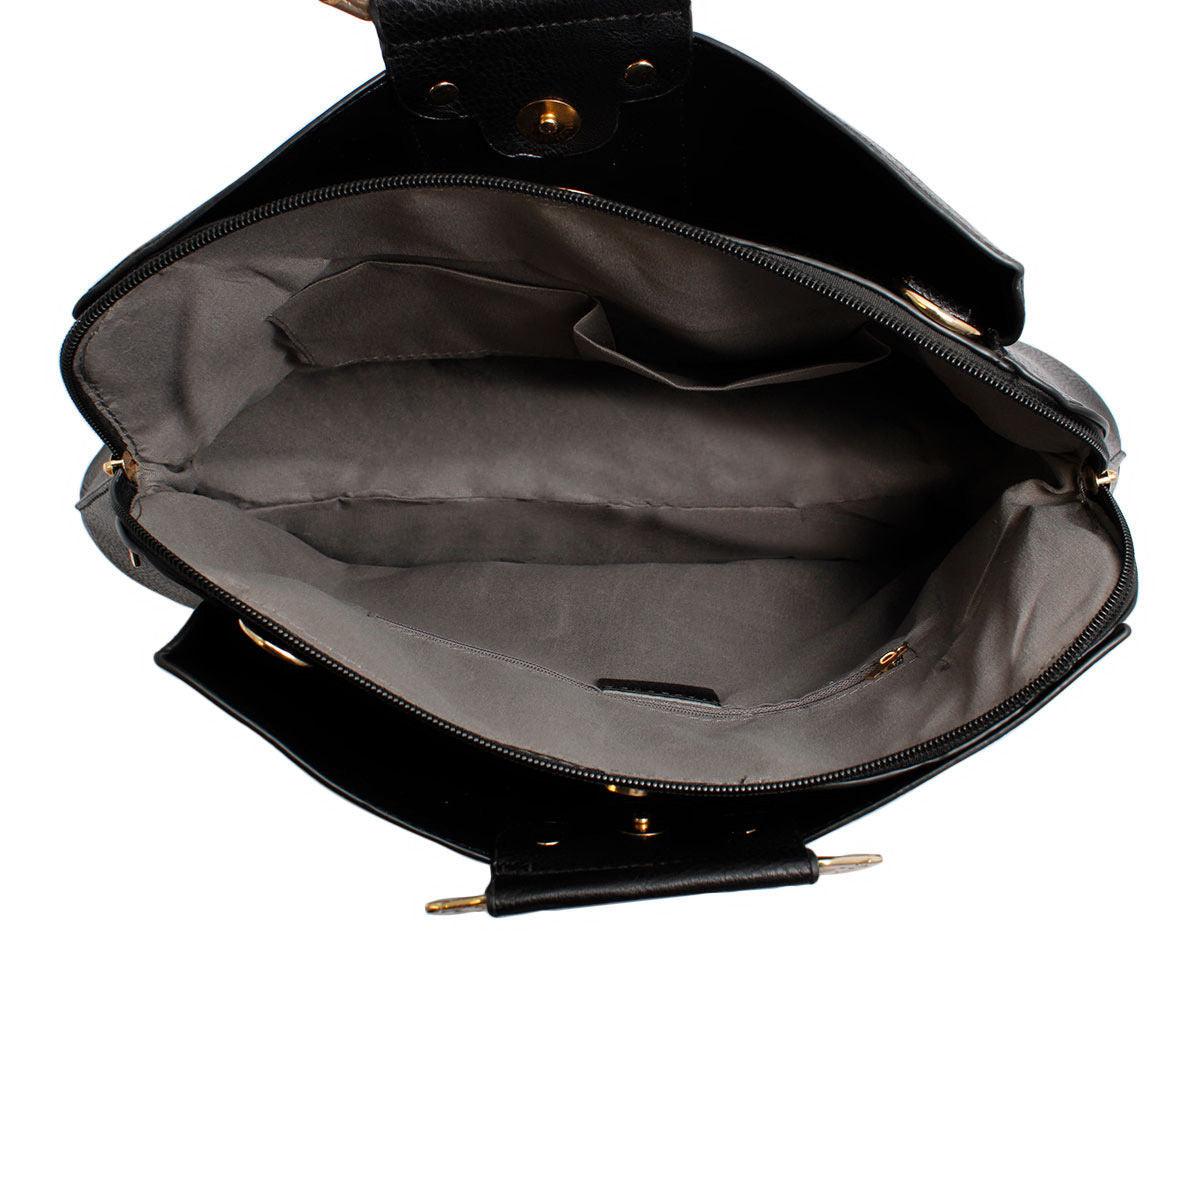 Luxe Black Rigid Top Handle Handbag: Sophisticated Style for Women